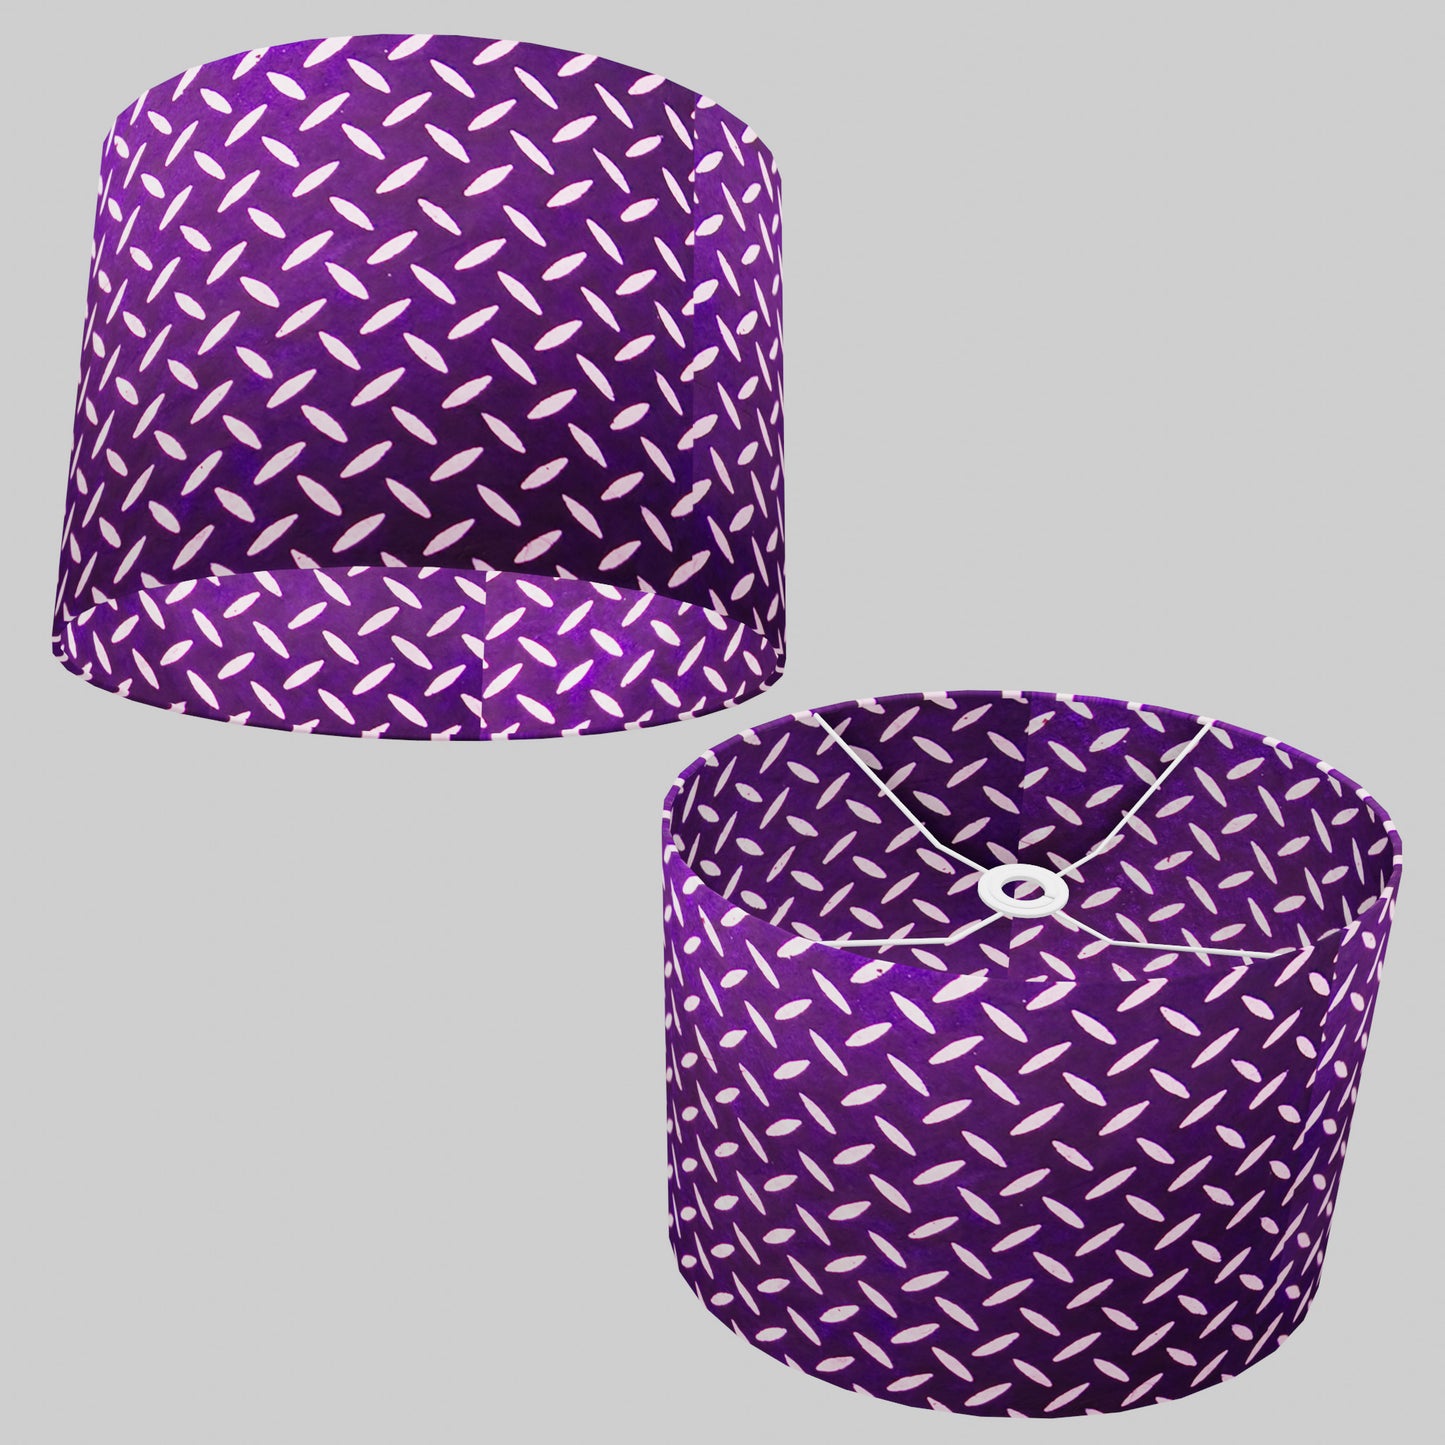 Oval Lamp Shade - P13 - Batik Tread Plate Purple, 40cm(w) x 30cm(h) x 30cm(d)